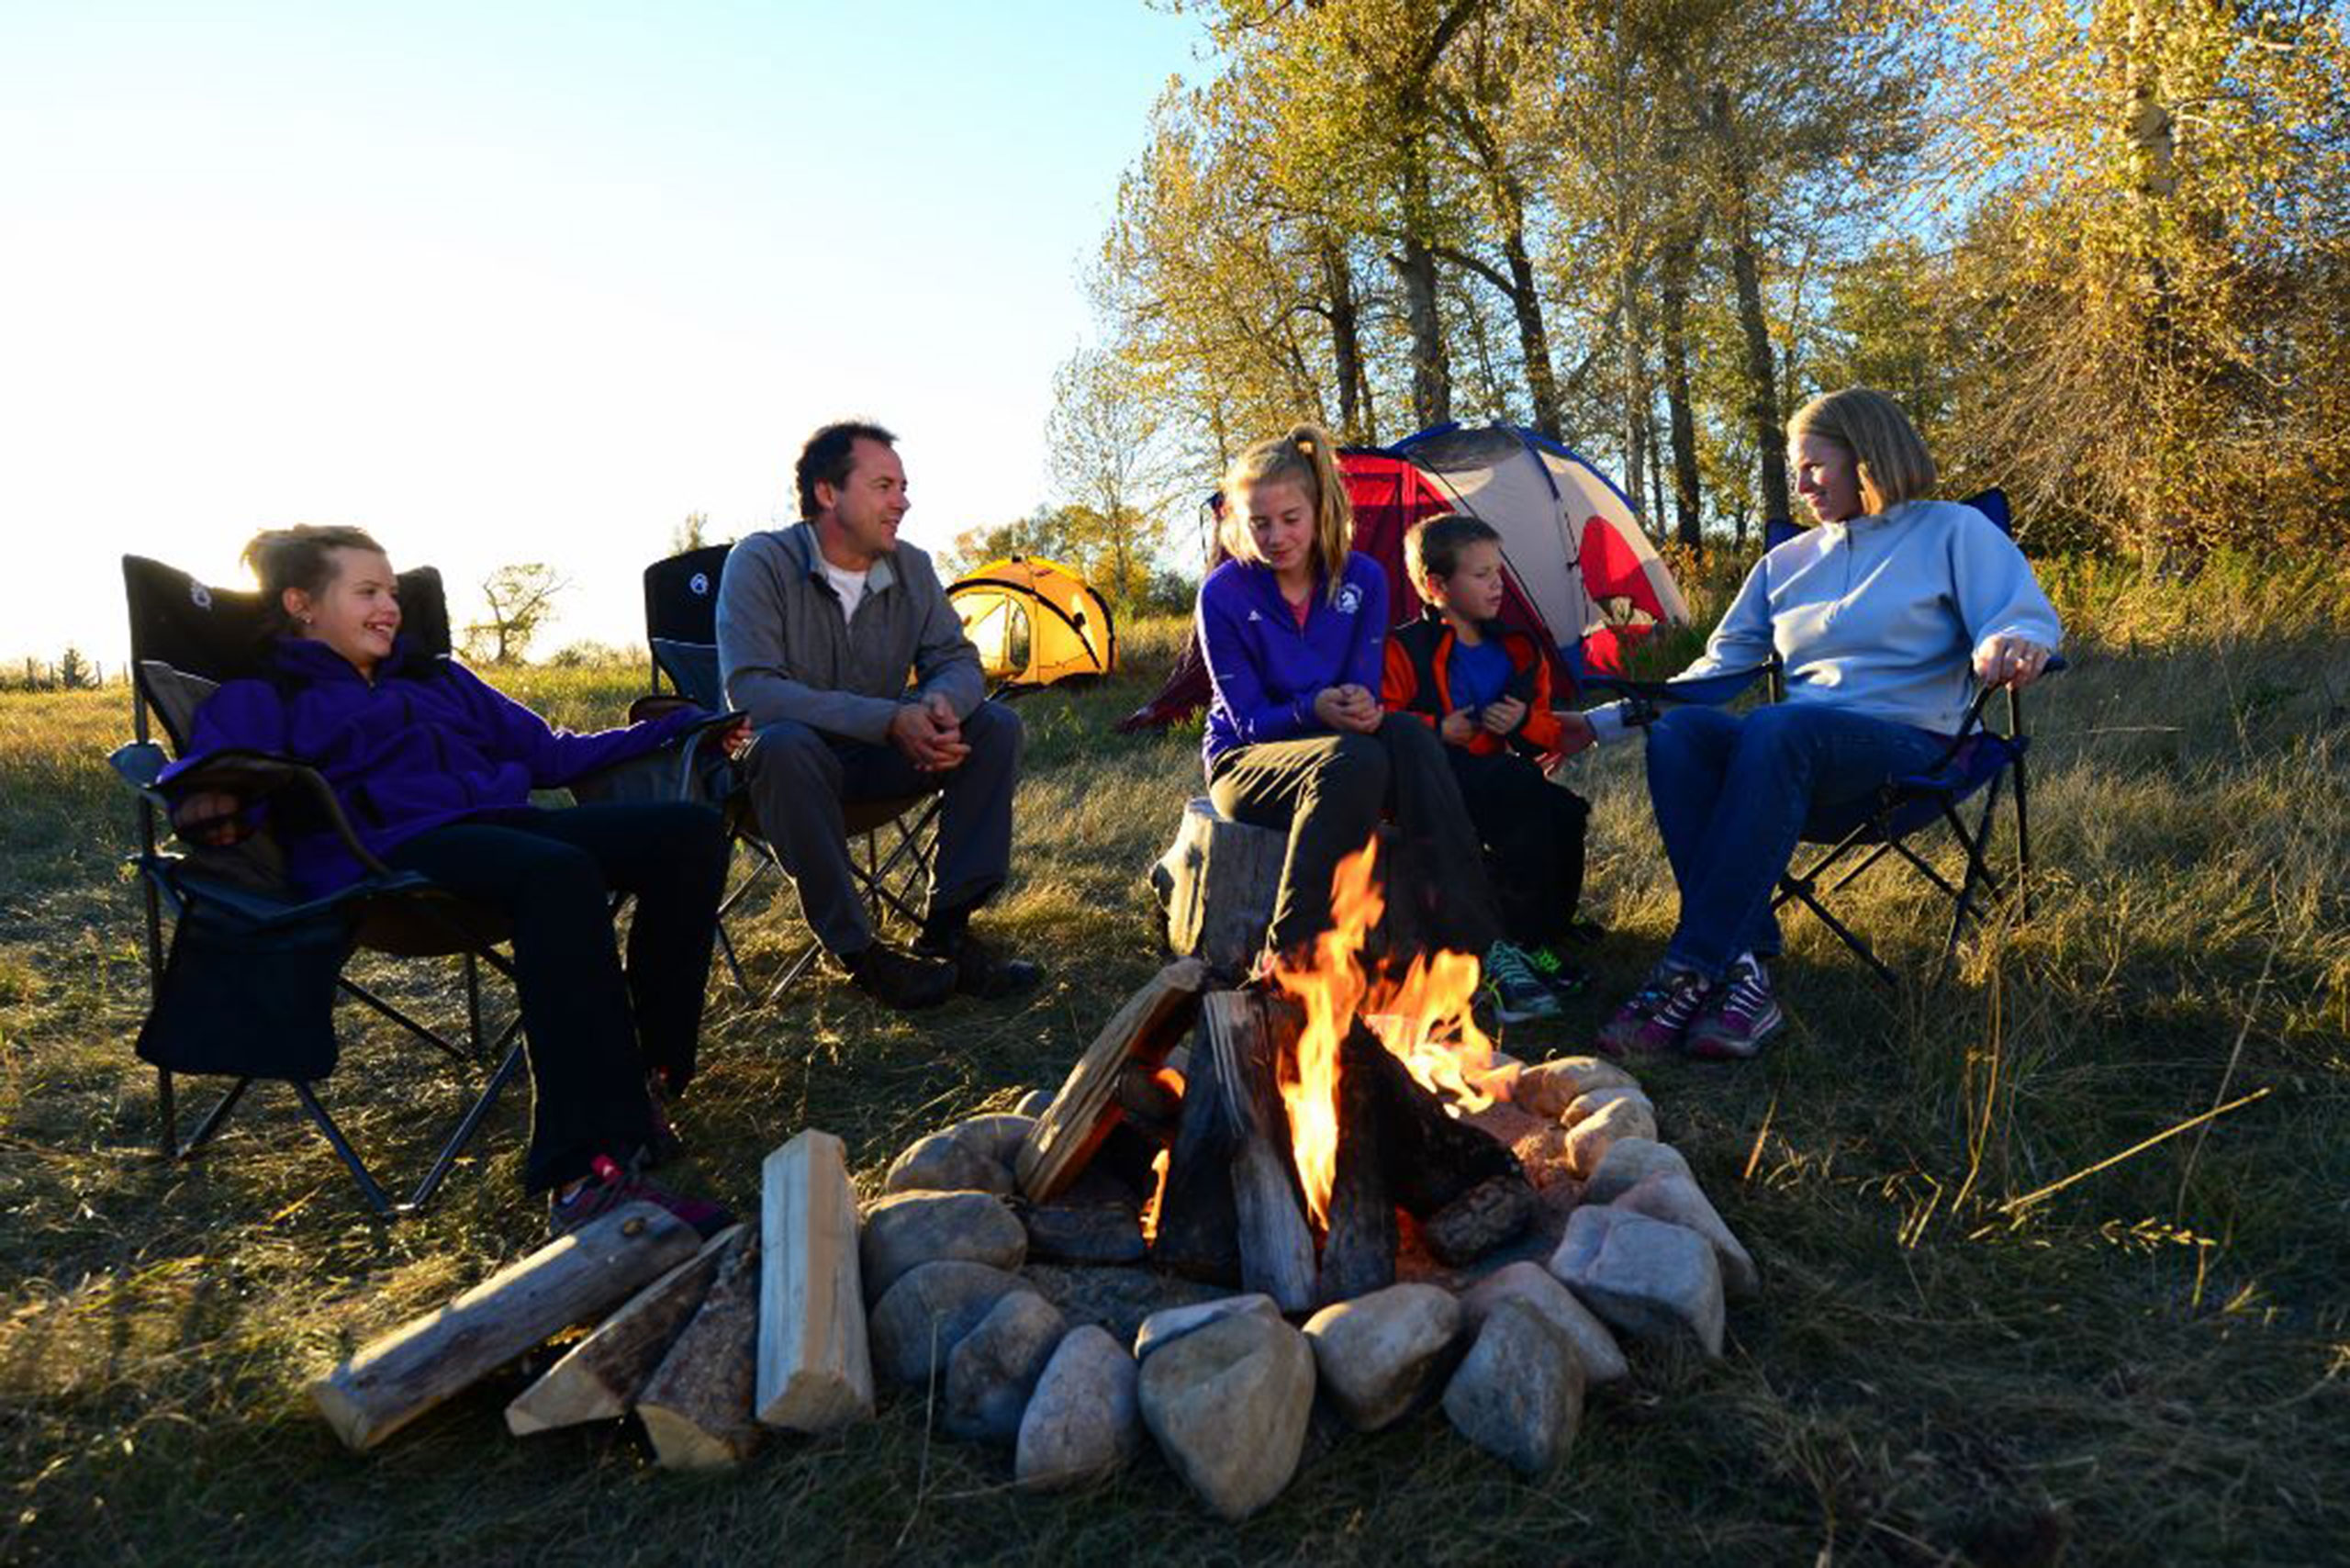 Steve Bullock and family camping in Montana